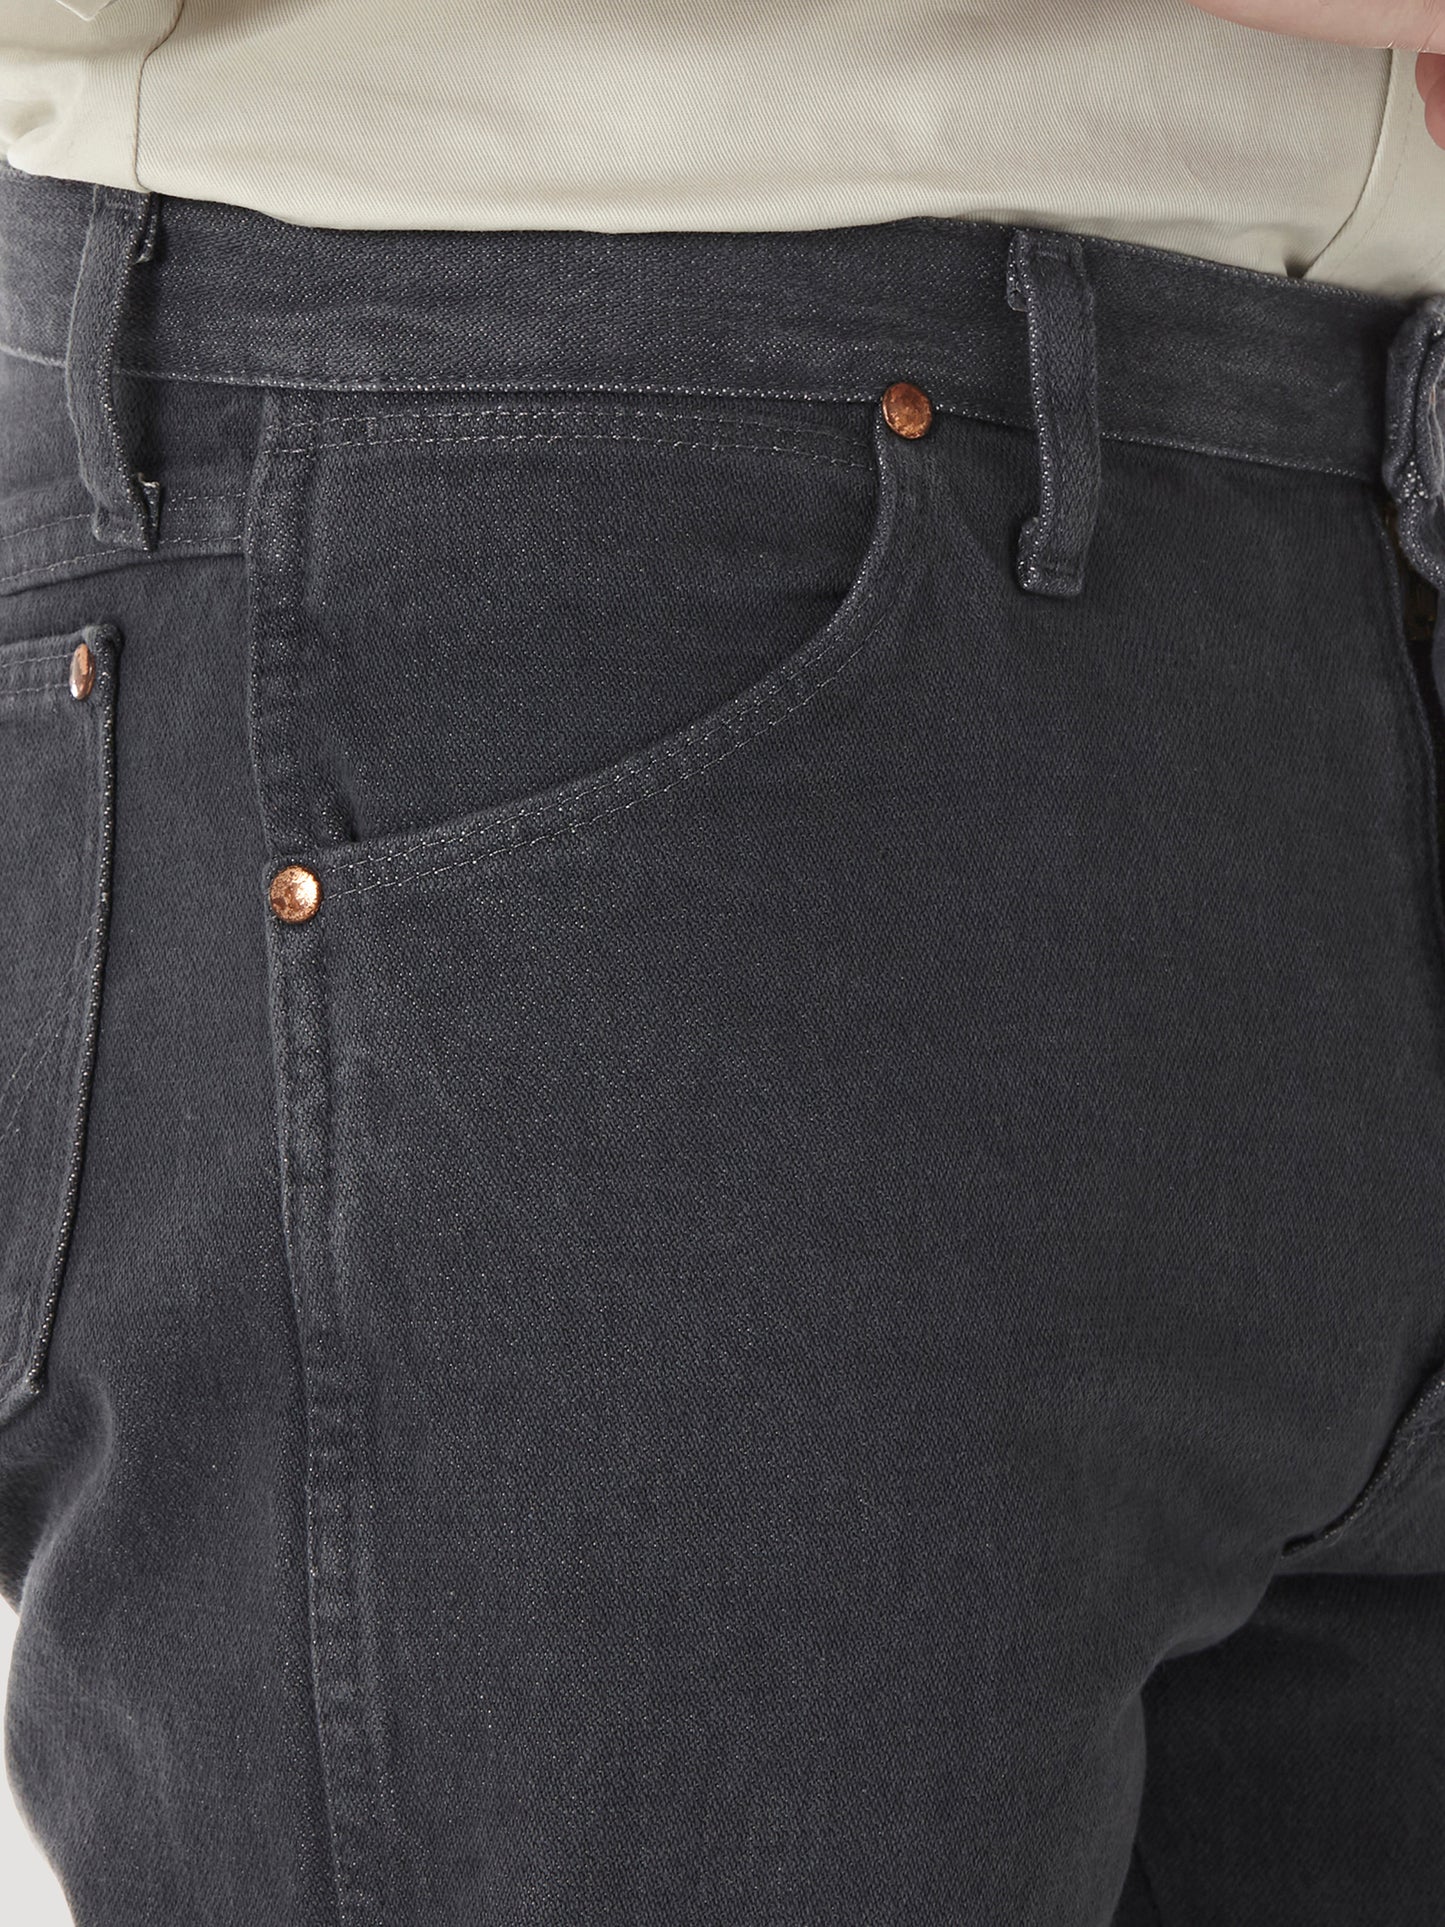 Wrangler USA Mens Cowboy Cut Original Fit Jeans - Charcoal Grey - 13MWZCG34